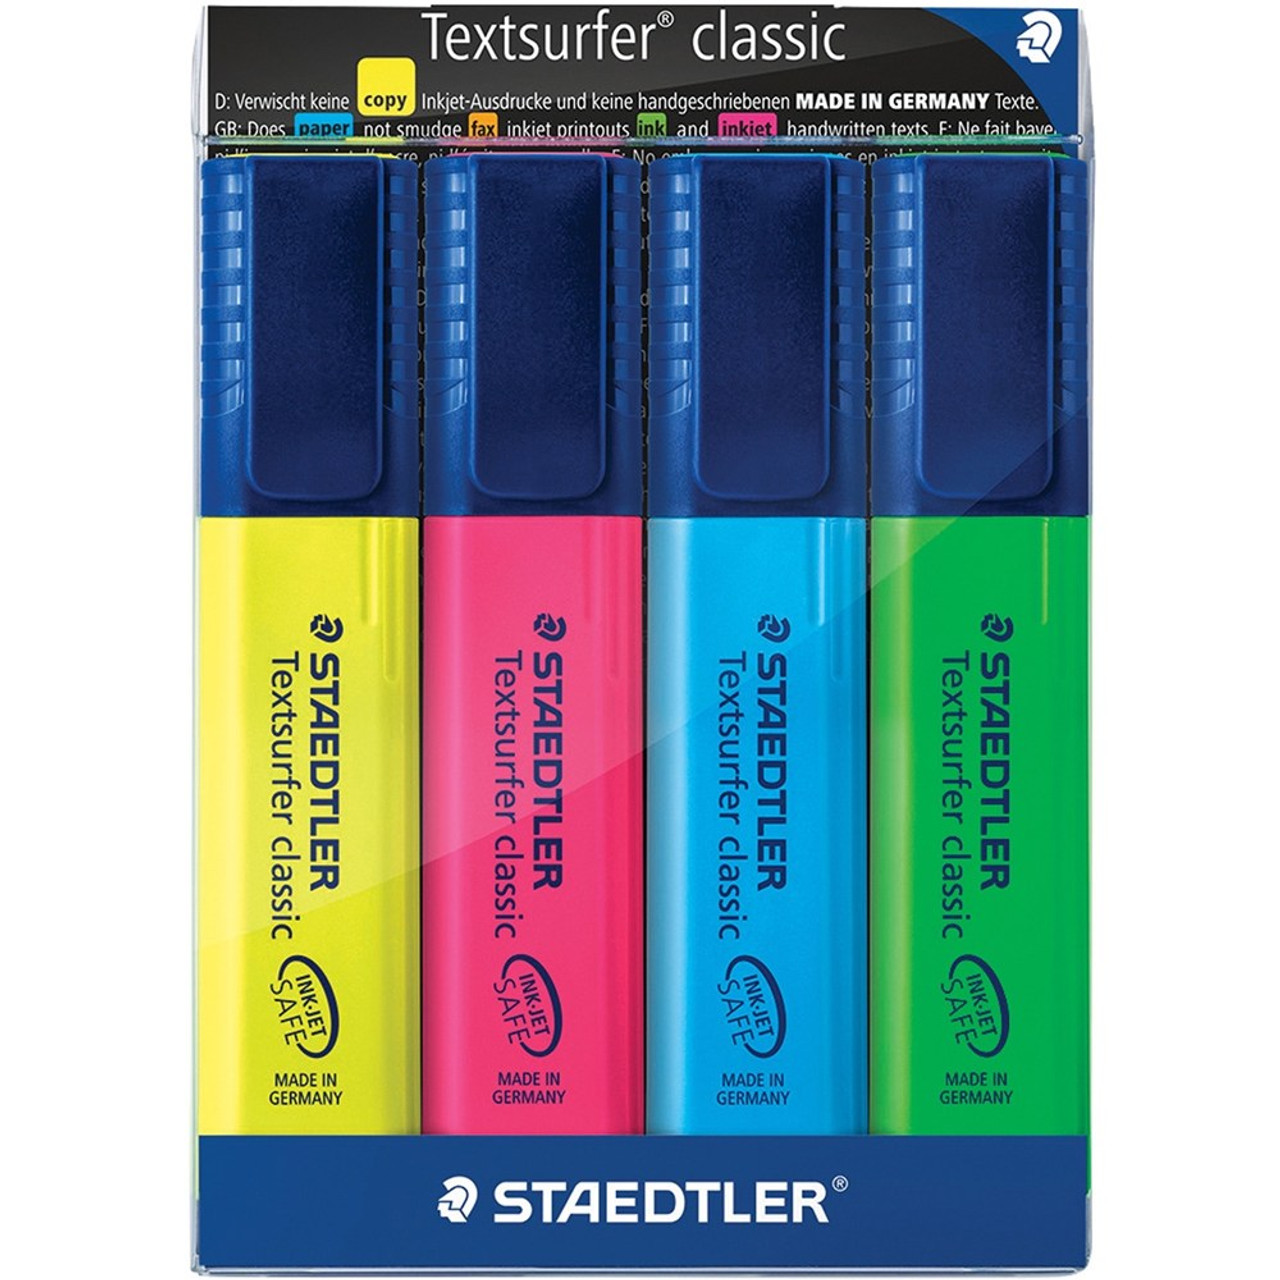 Staedtler Textsurfer Highlighter - Sky Blue